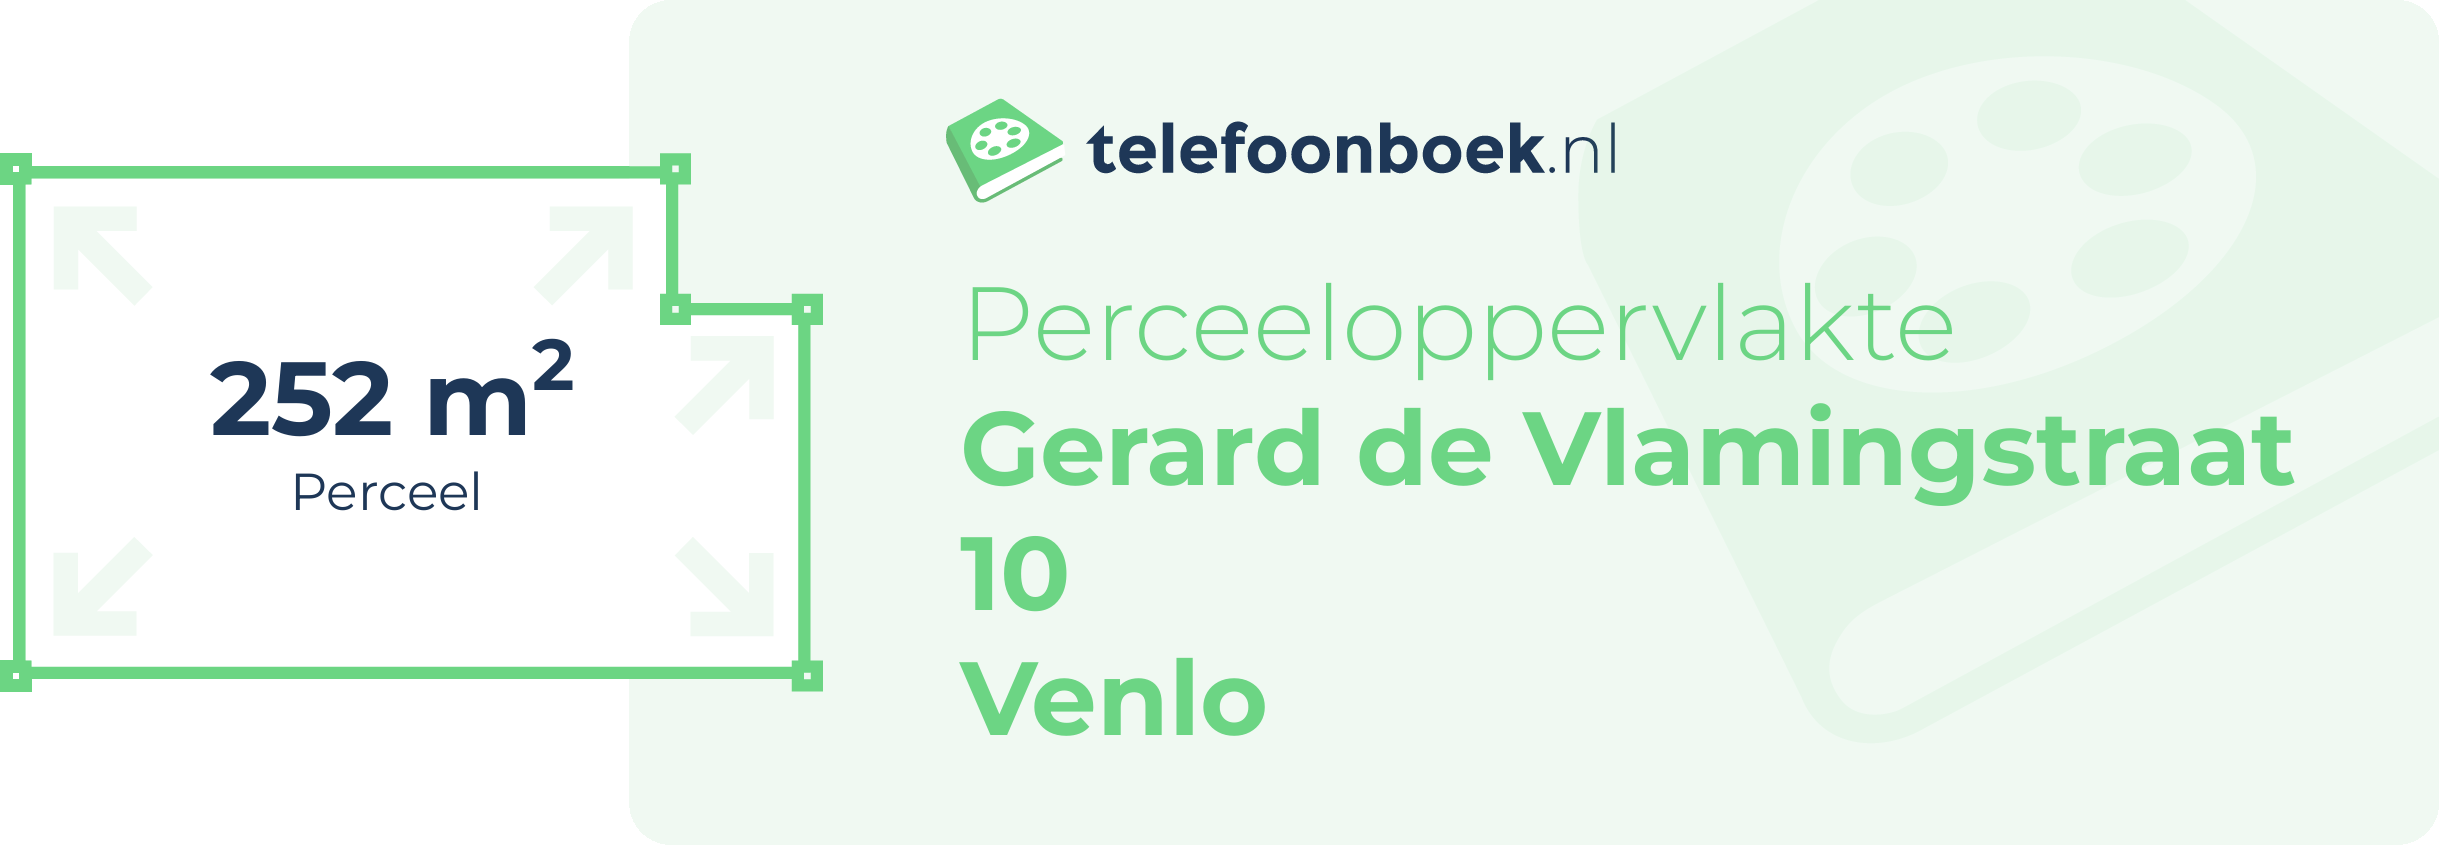 Perceeloppervlakte Gerard De Vlamingstraat 10 Venlo